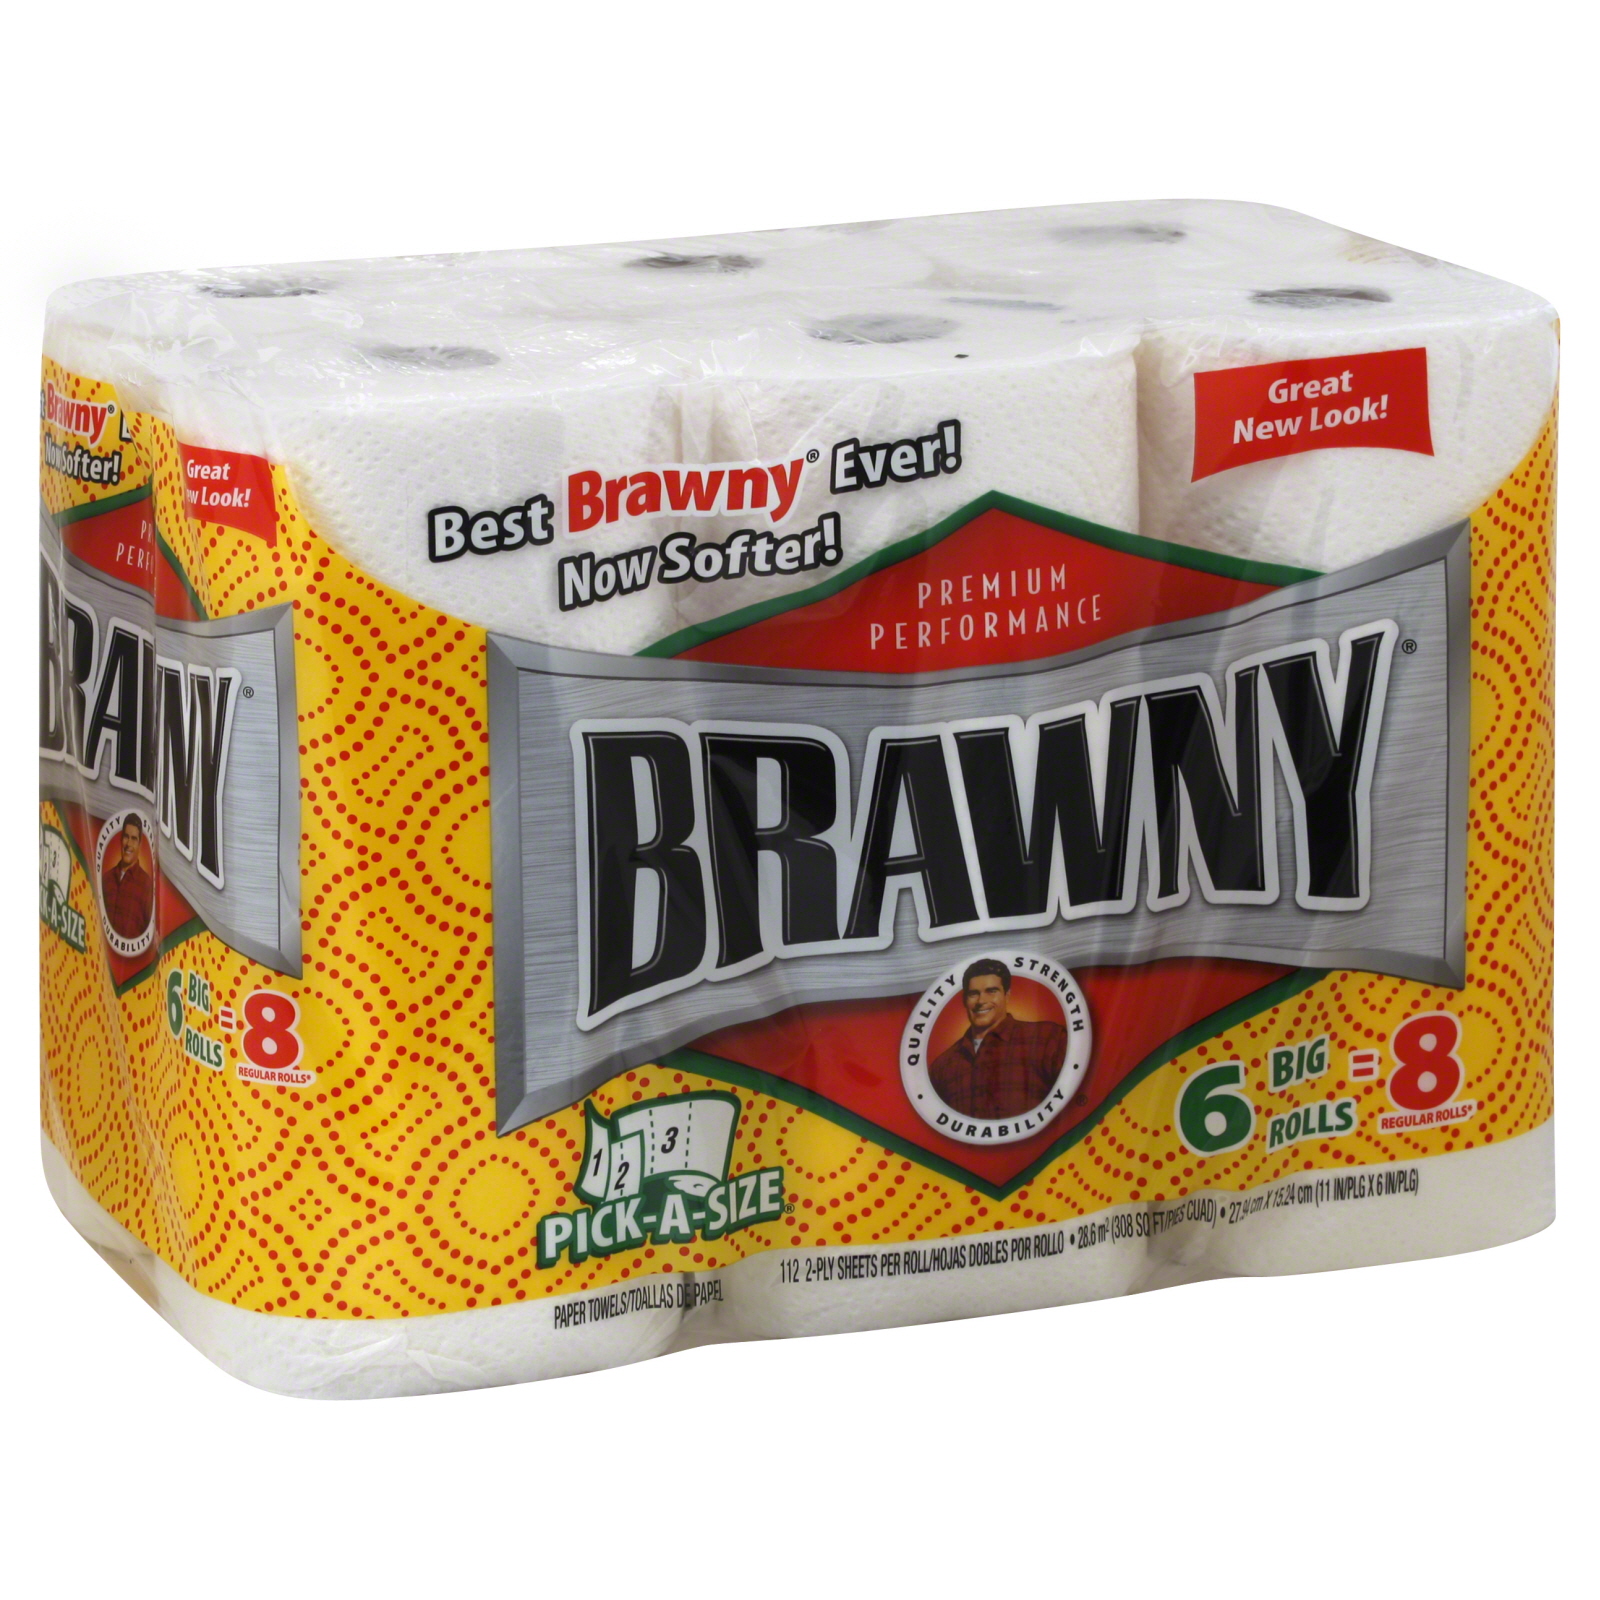 Brawny Pick-A-Size Paper Towels, Big Roll, White, 2-Ply, 6 rolls